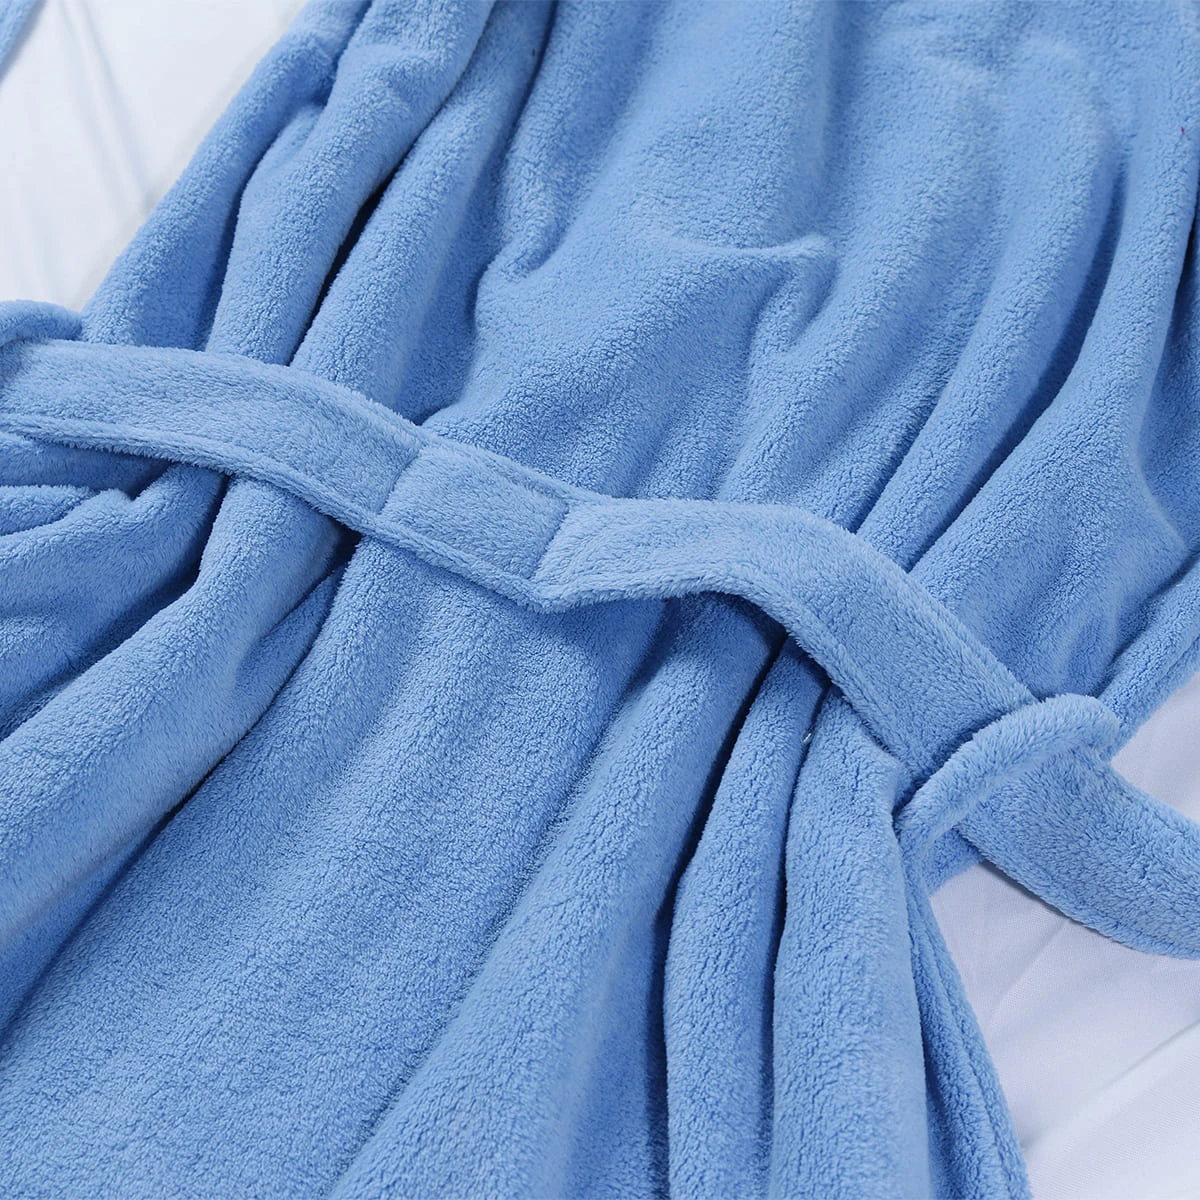 Solid Color Flannel Bathrobe (Blue)